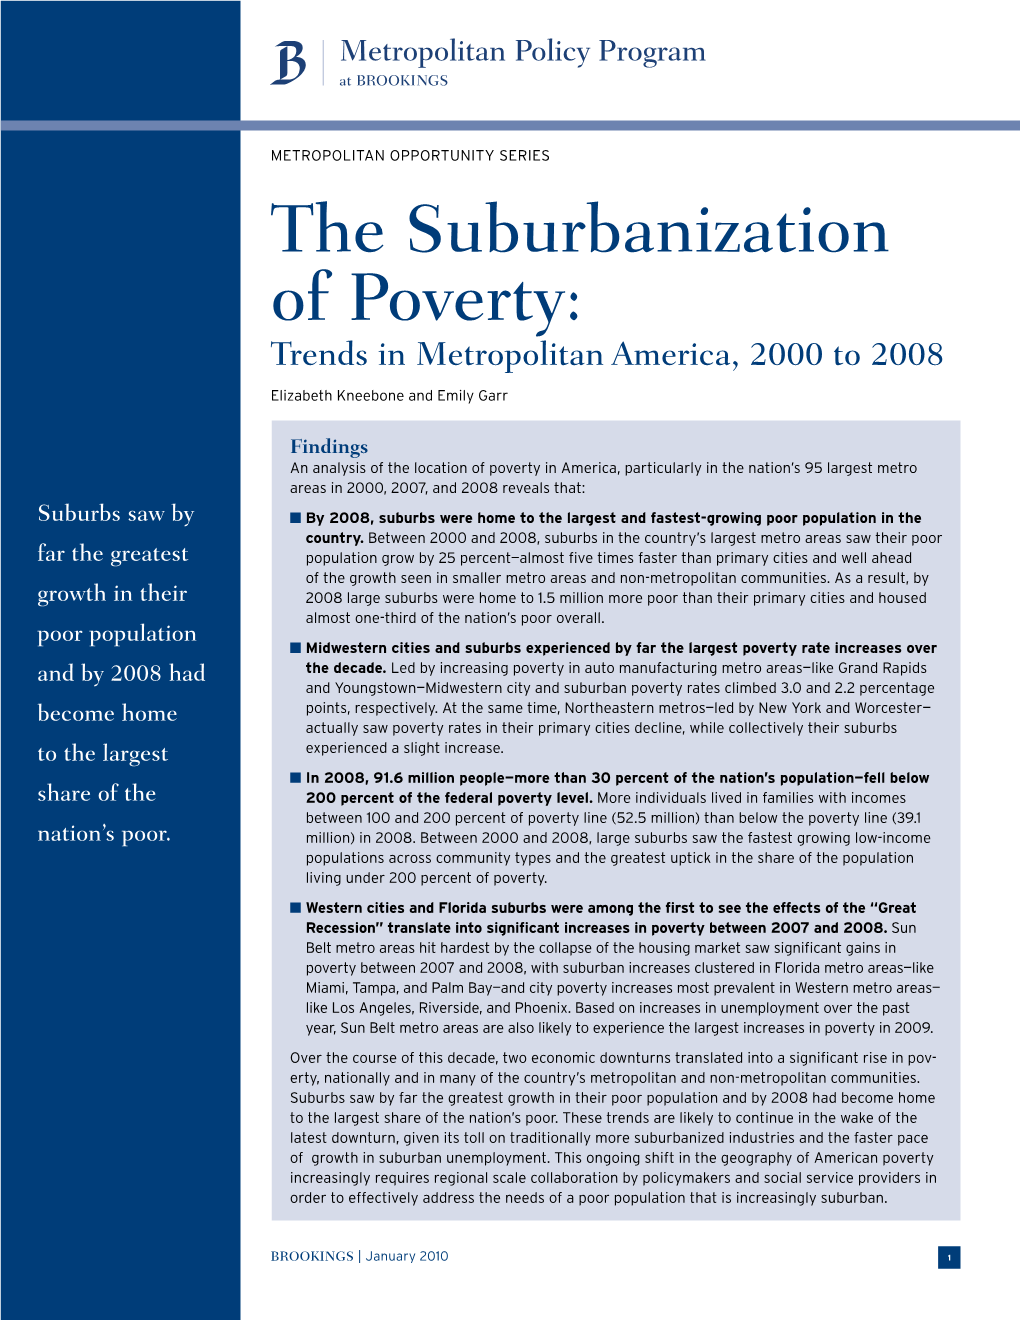 The Suburbanization of Poverty: Trends in Metropolitan America, 2000 to 2008